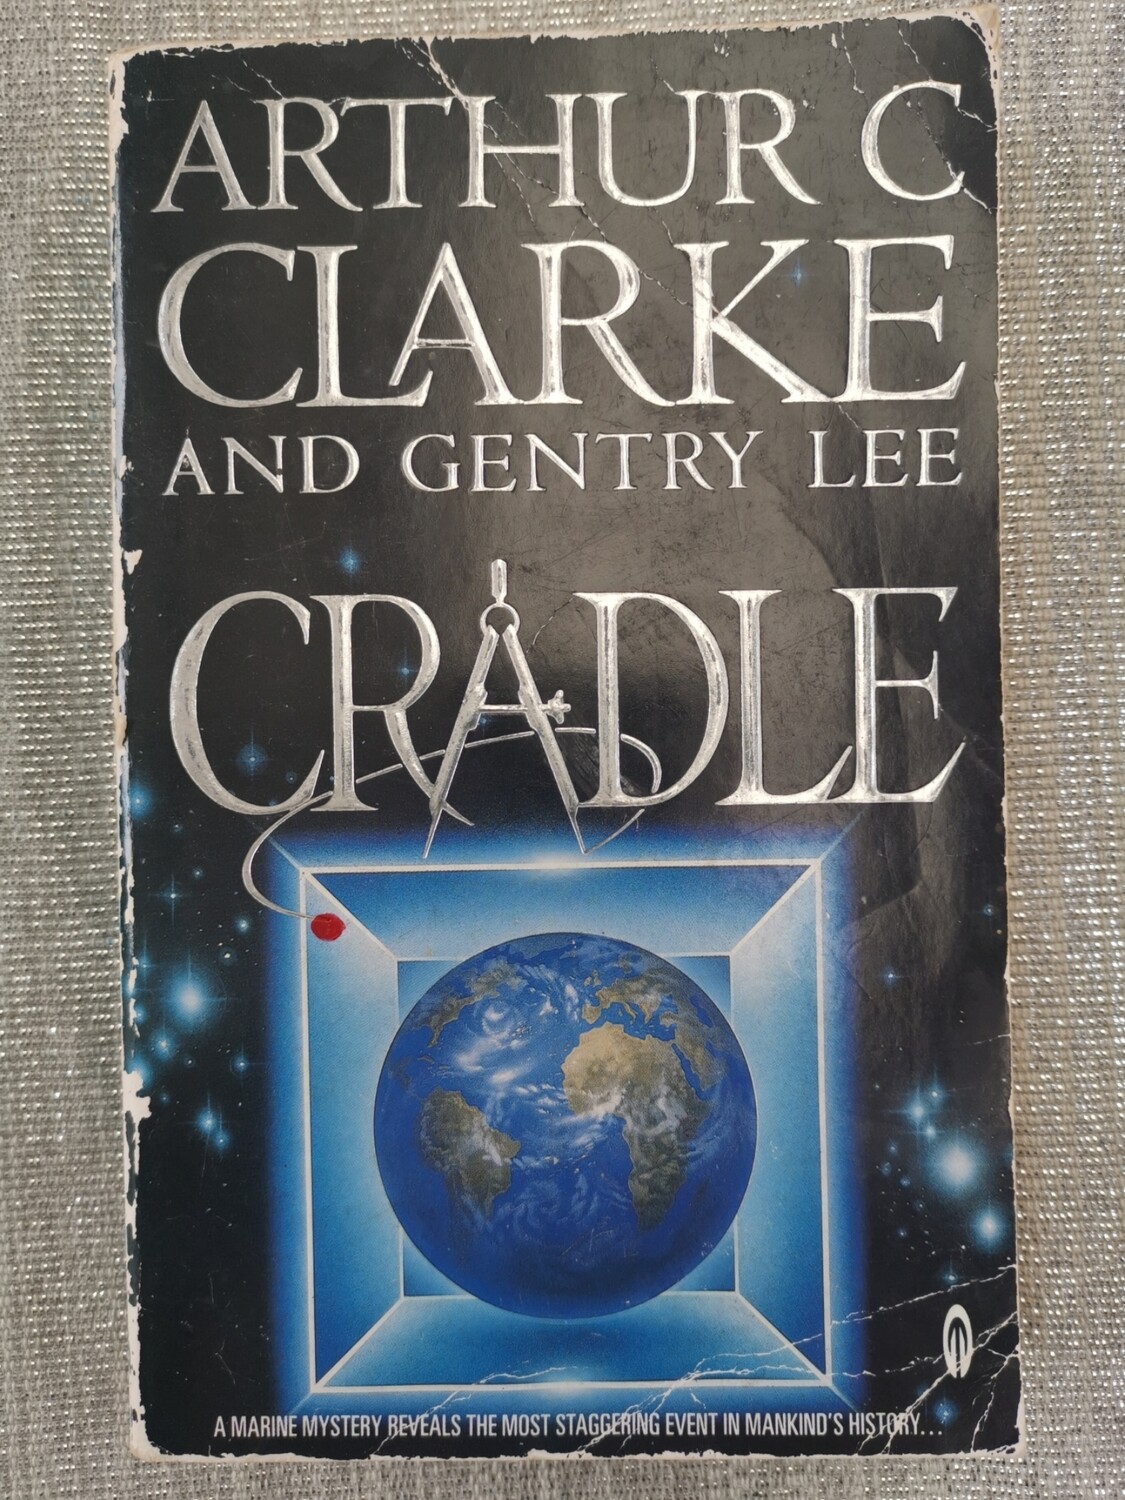 Cradle, Arthur C. Clarke and Gentry Lee